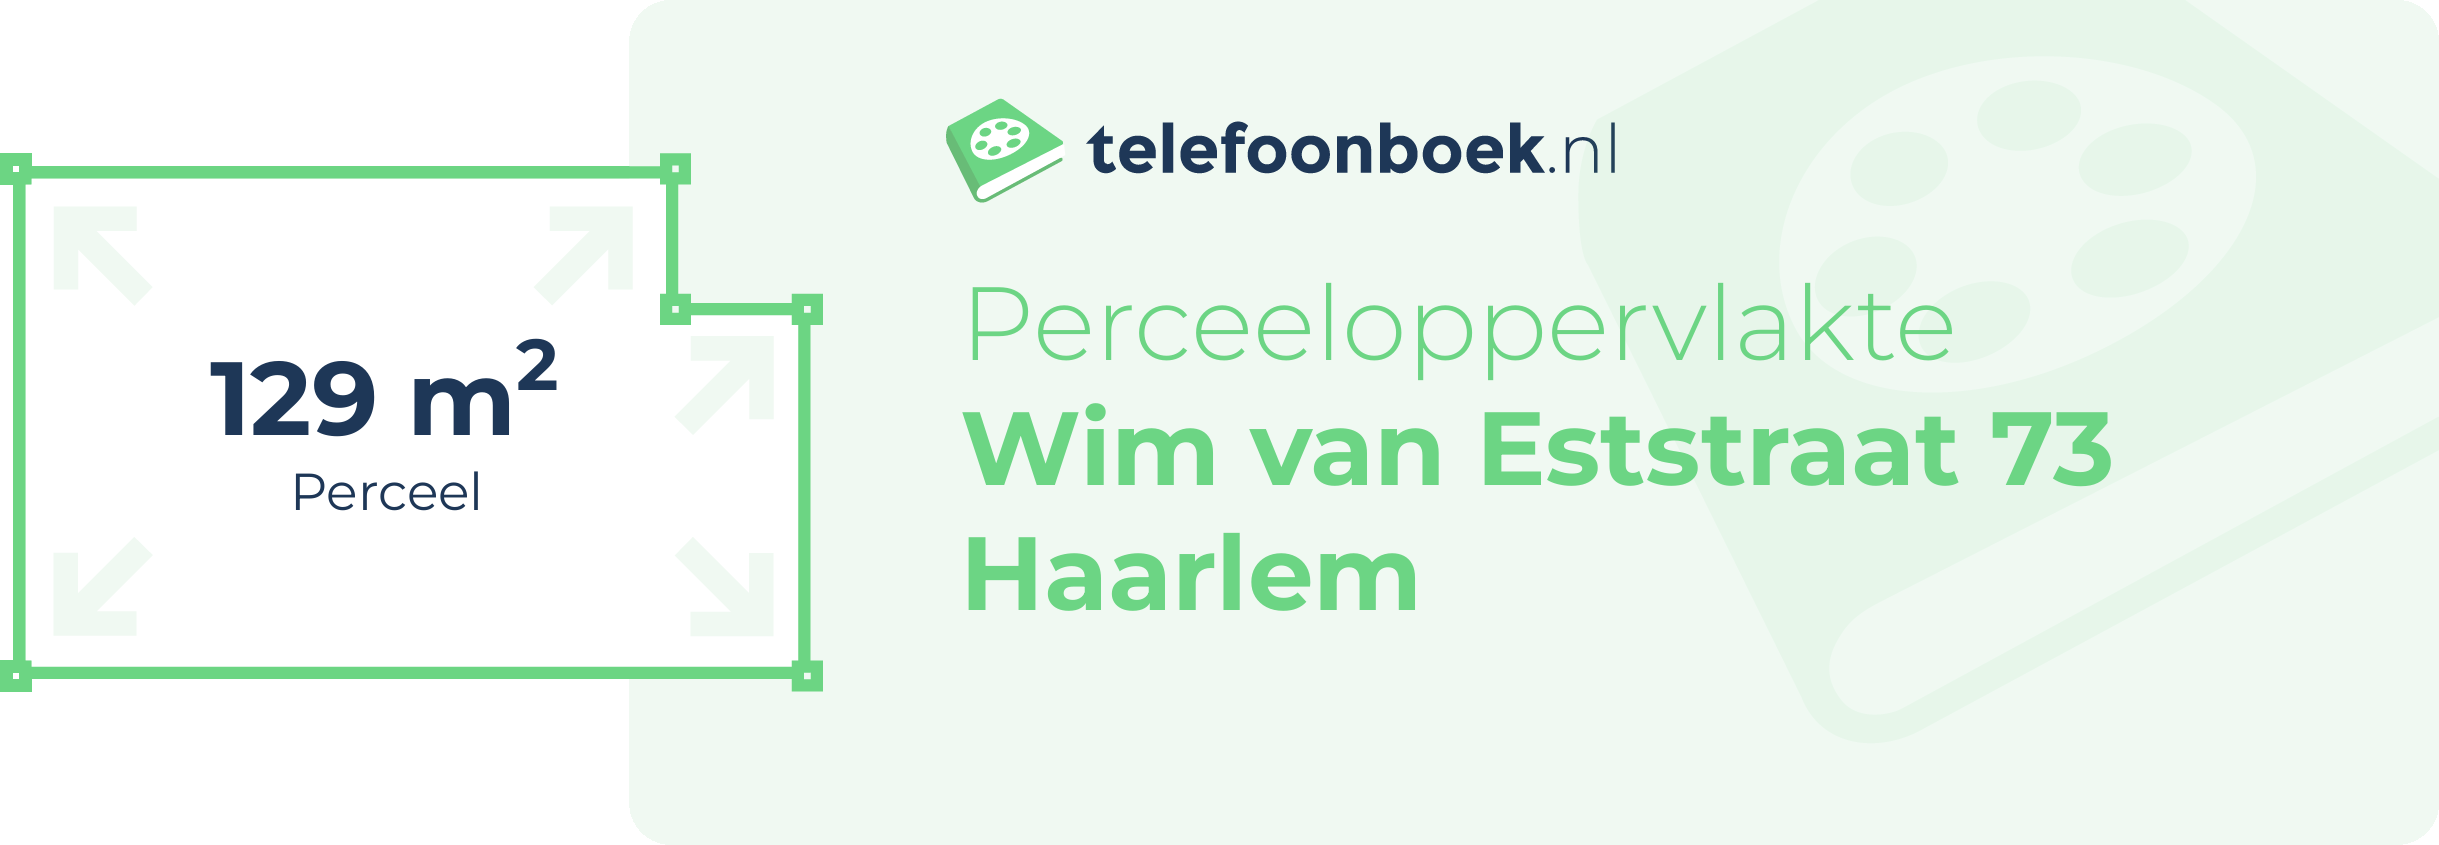 Perceeloppervlakte Wim Van Eststraat 73 Haarlem